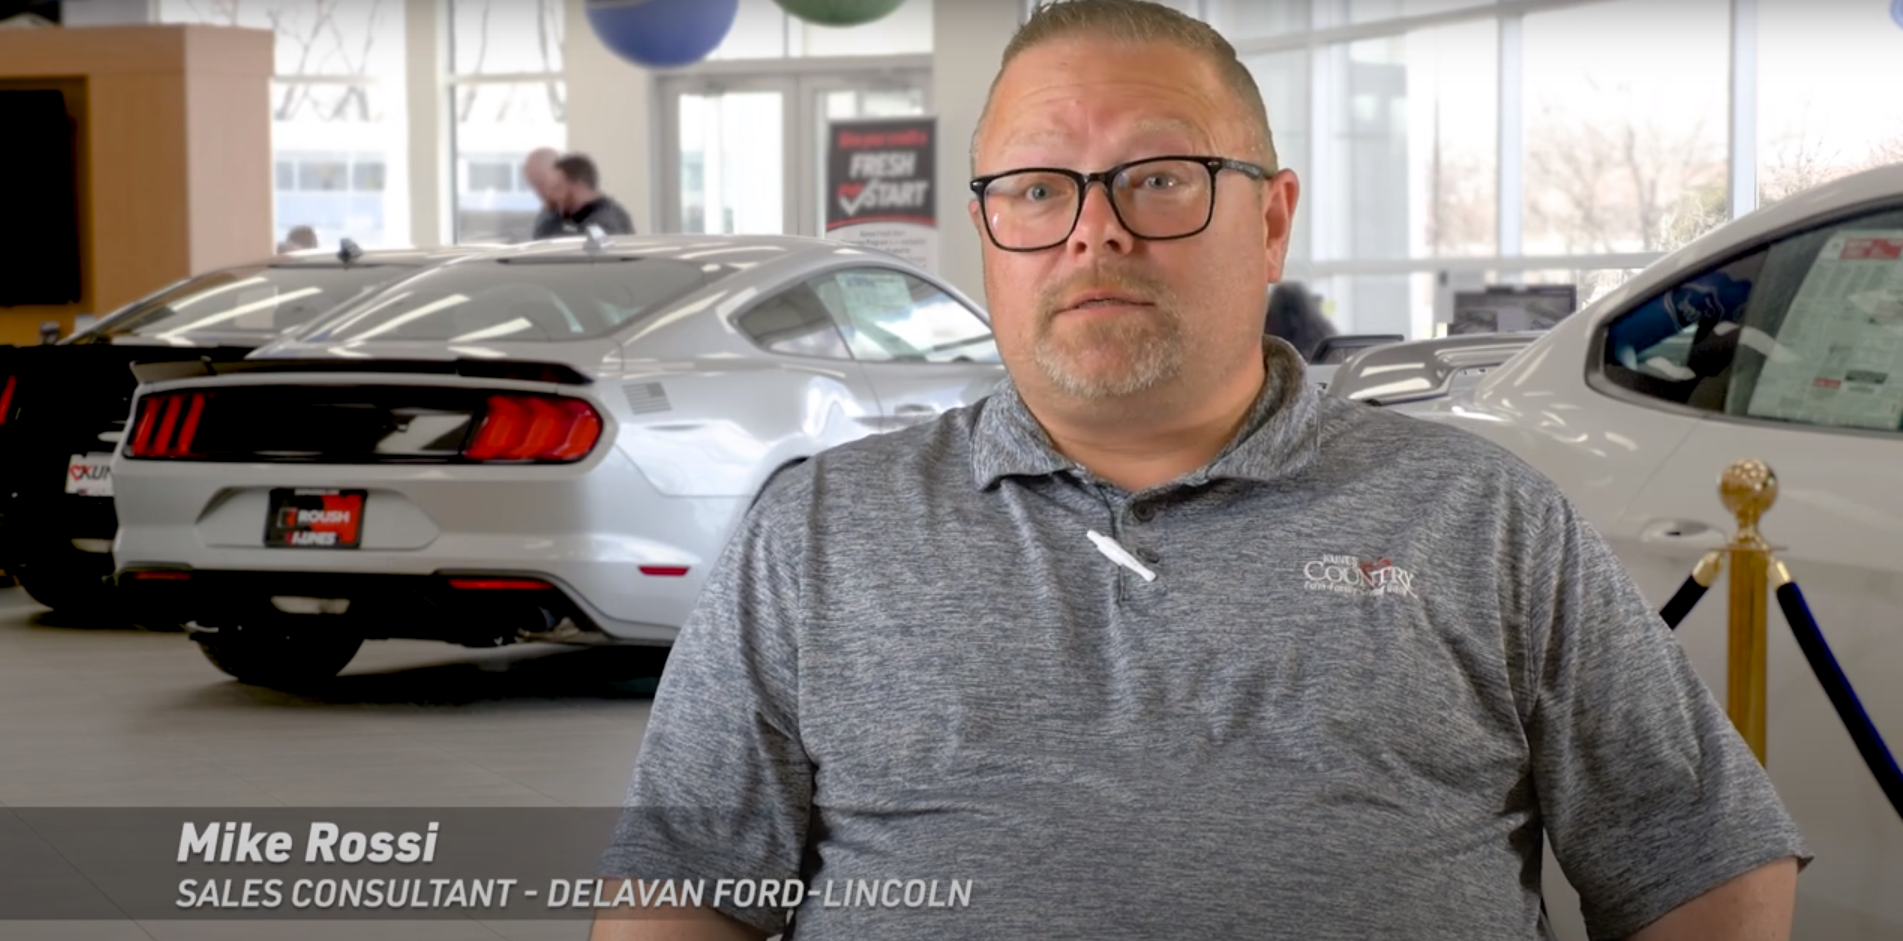 Mike Rossi Sales Consultant - Delavan Ford